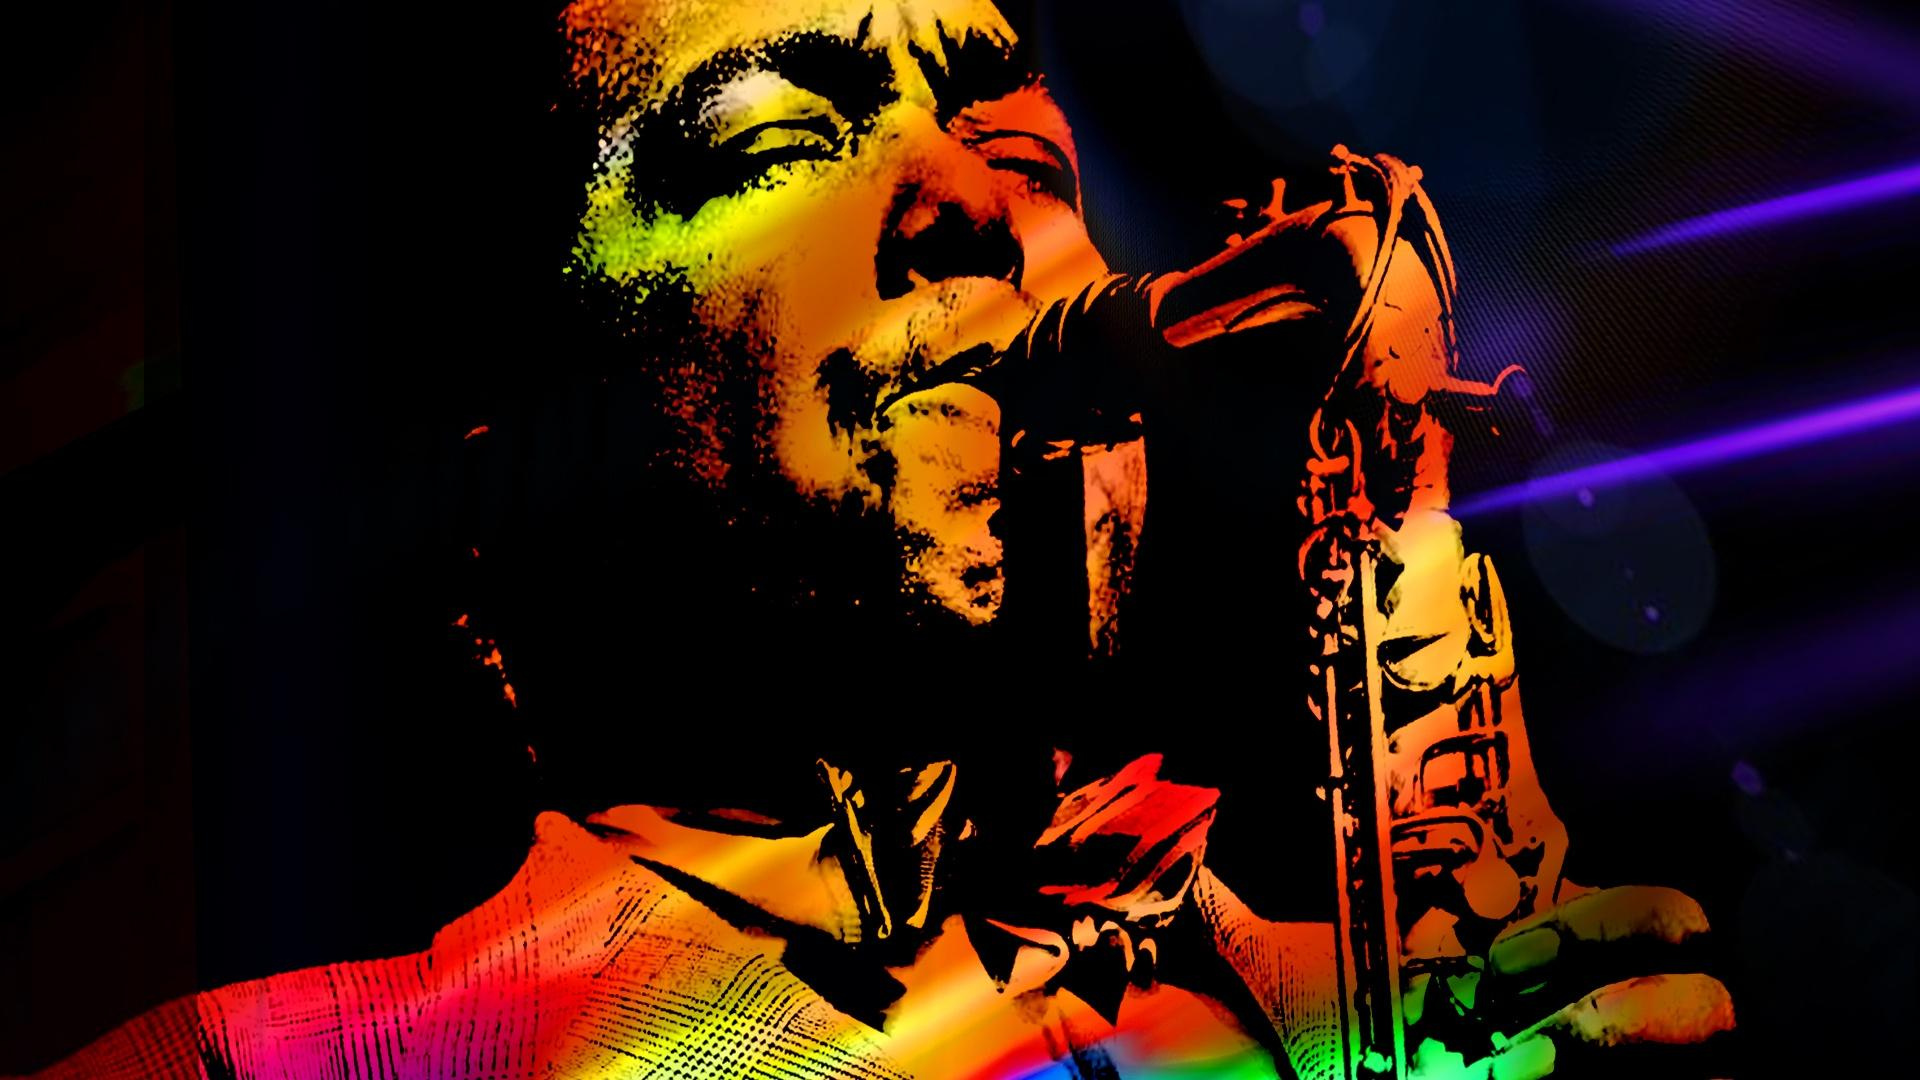 A Look Back at Jazz Musician Charlie “Bird” Parker